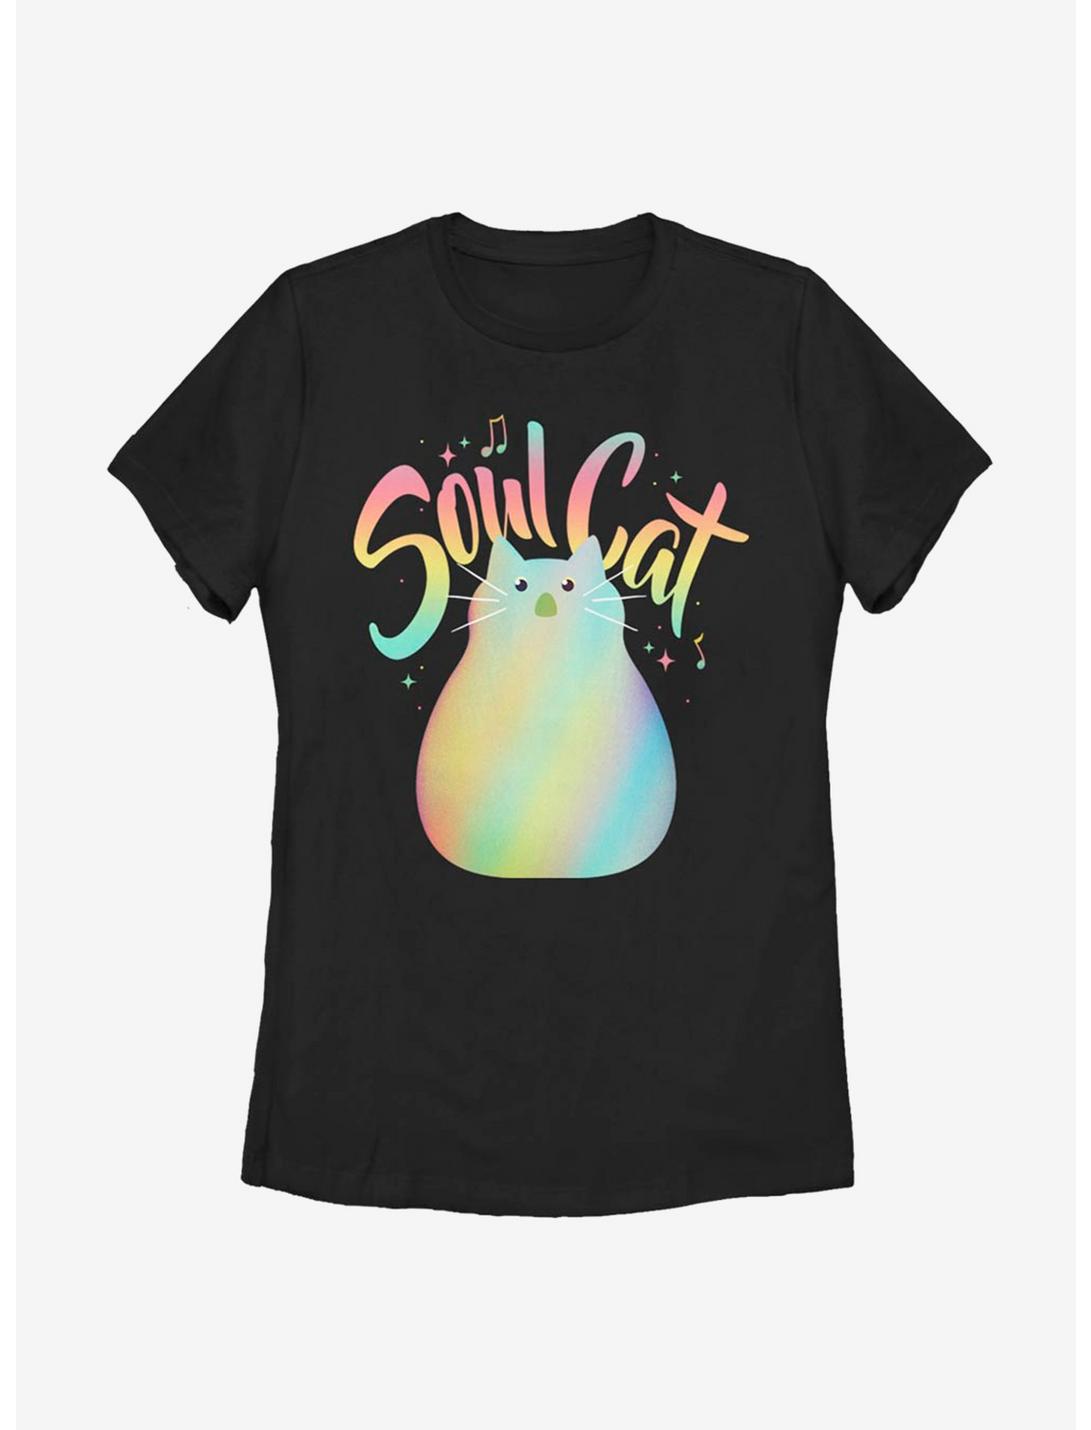 Disney Pixar Soul Kitty Womens T-Shirt, BLACK, hi-res